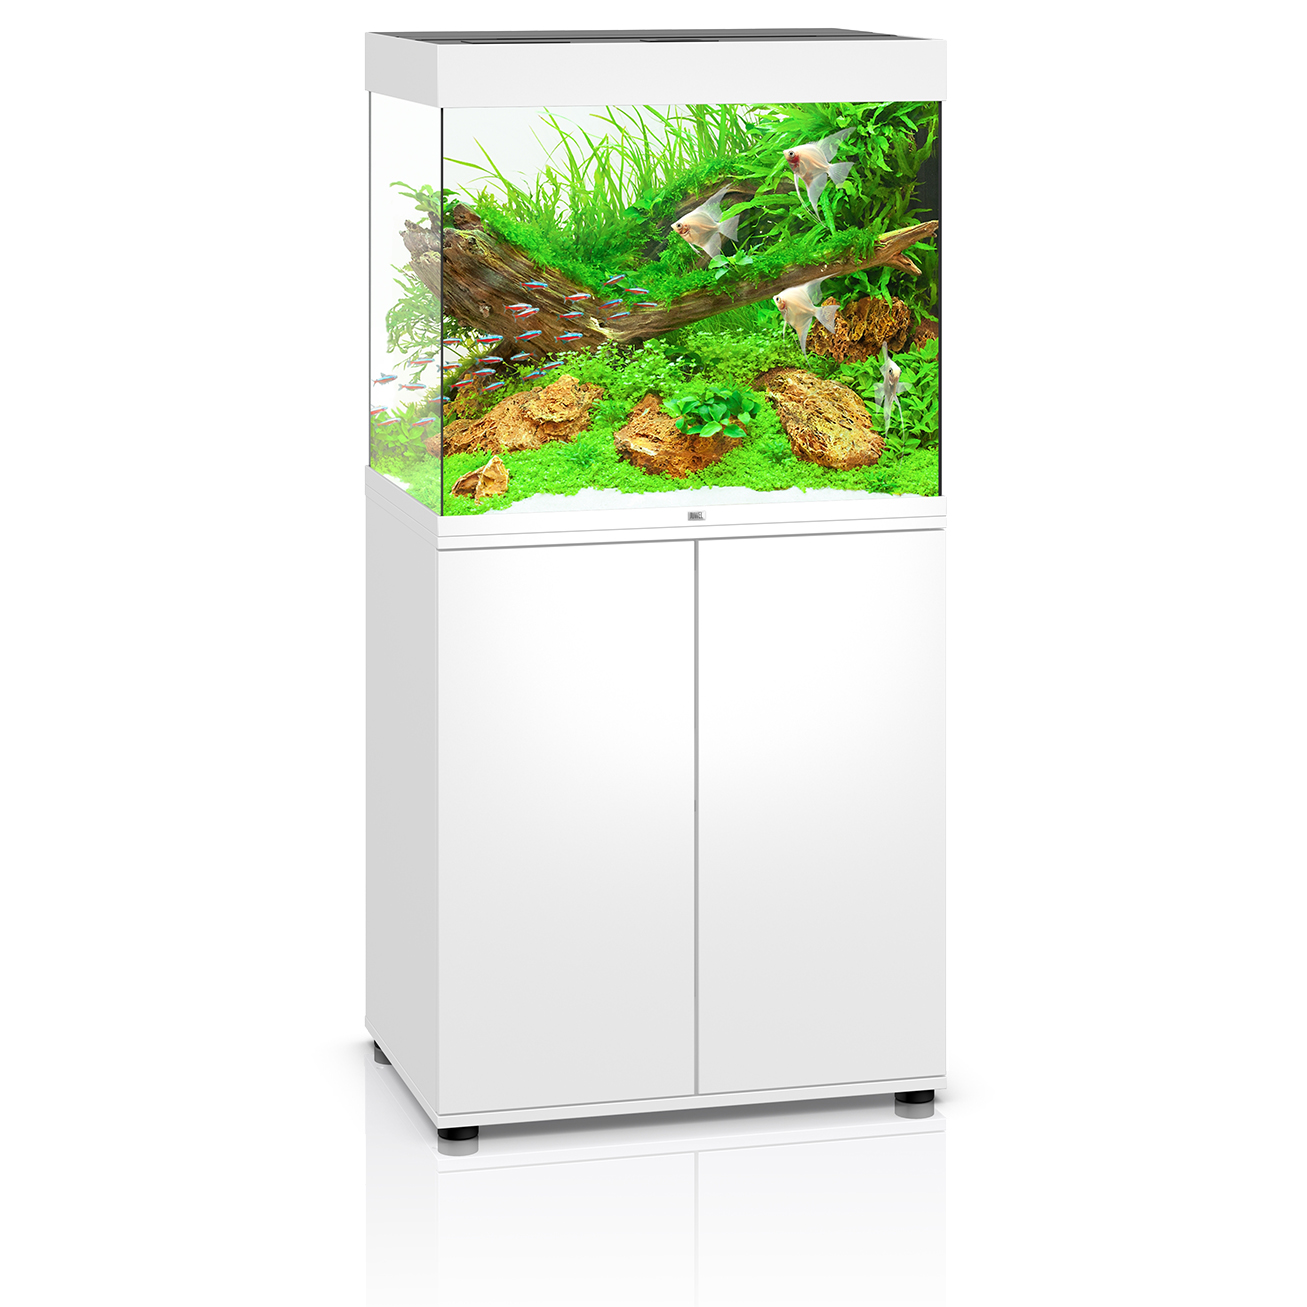 Juwel Lido 200 Aquarium & Cabinet - LED Lighting, Filter, Heater Fish Tank